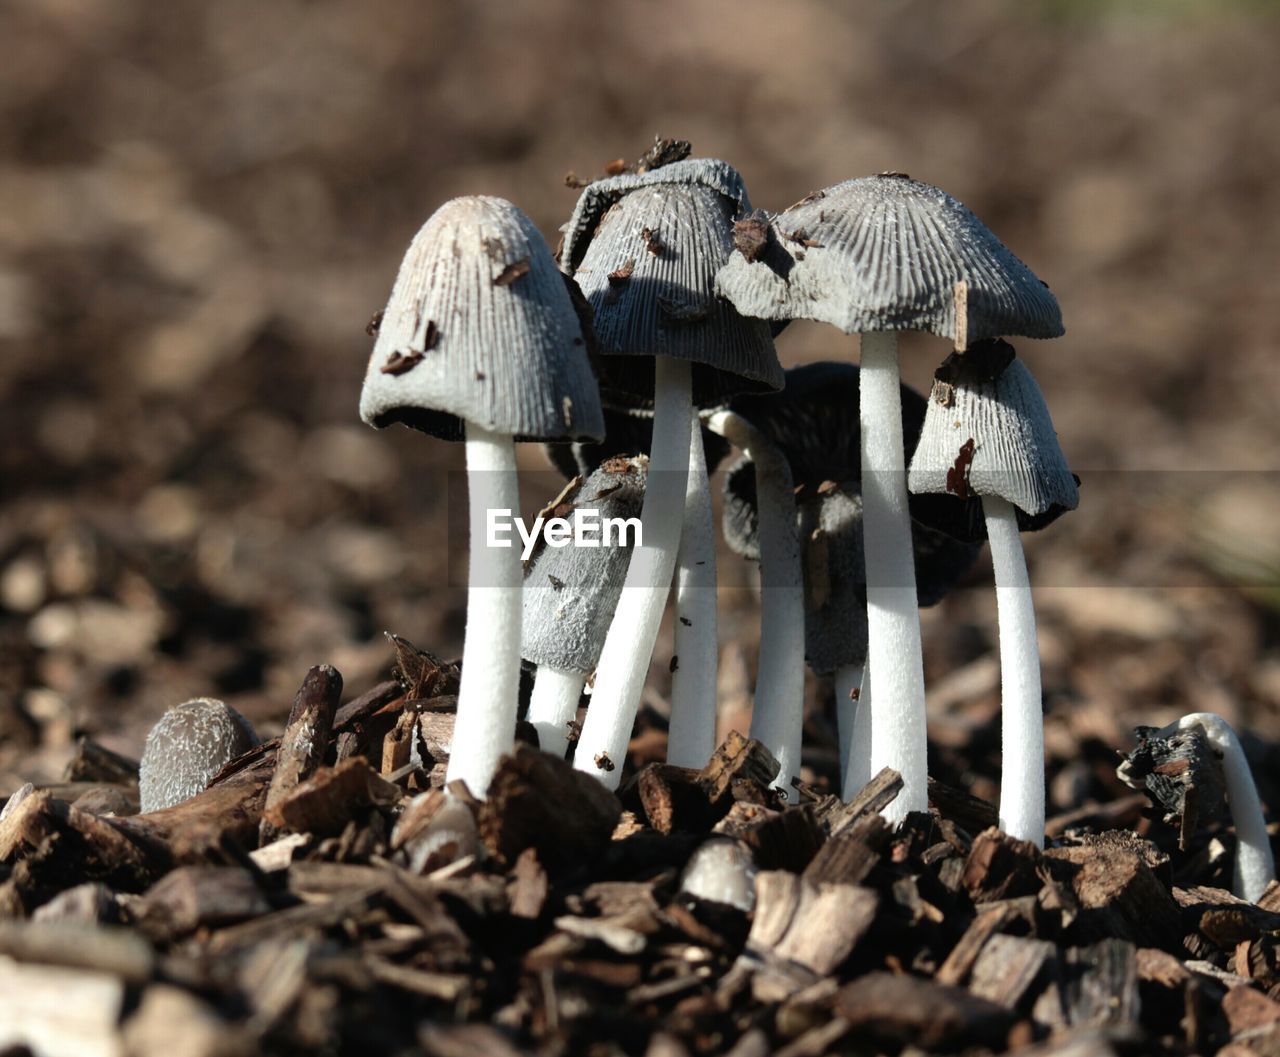 Mushrooms growing on field in forest